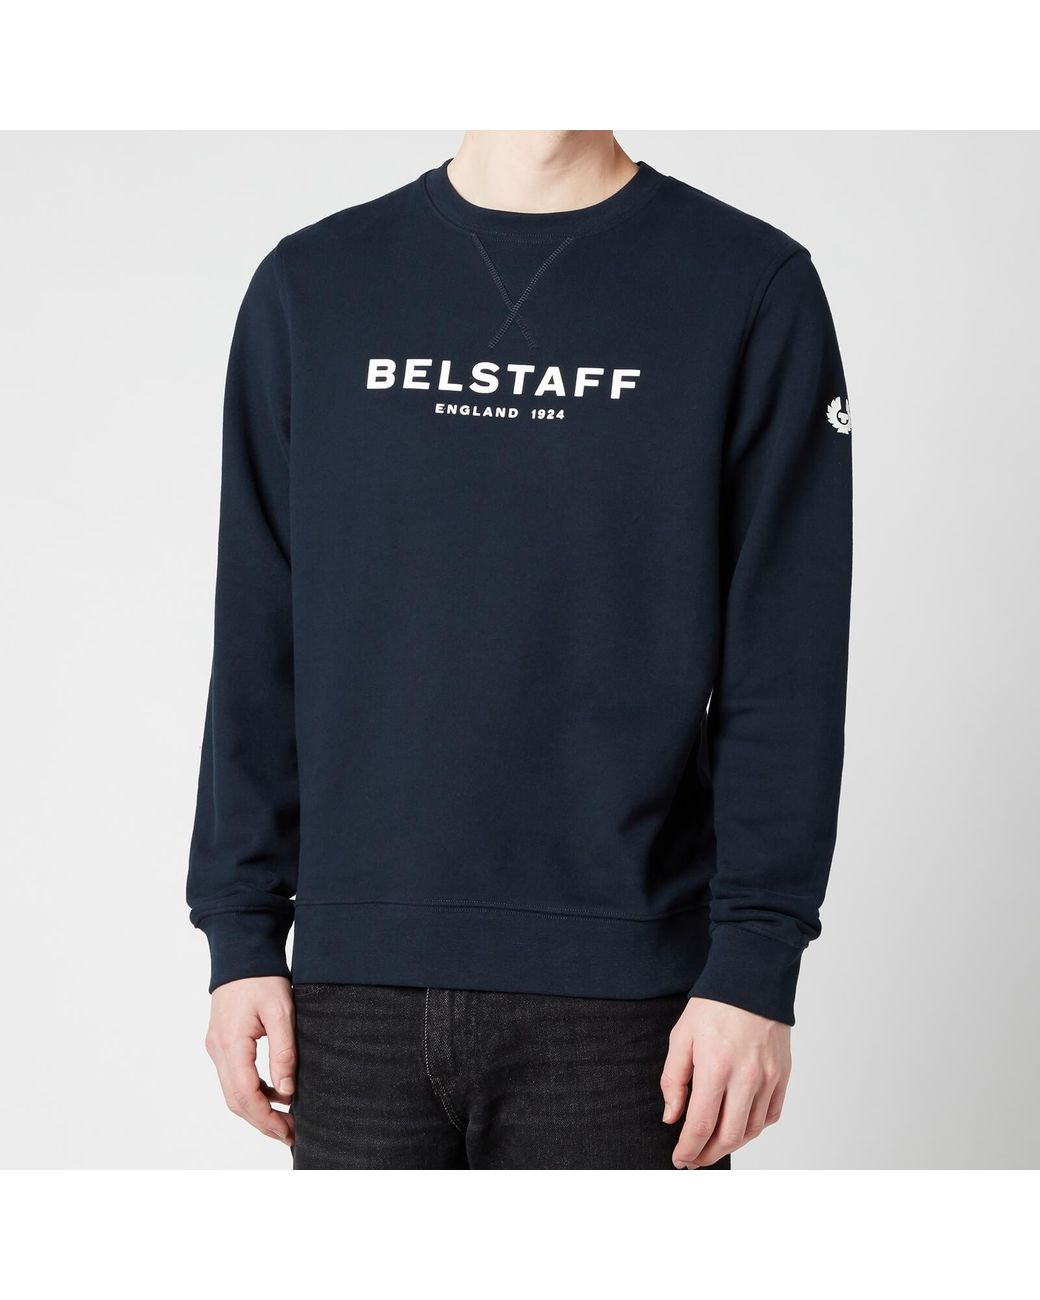 Belstaff Cotton 1924 Sweatshirt in Blue for Men - Lyst